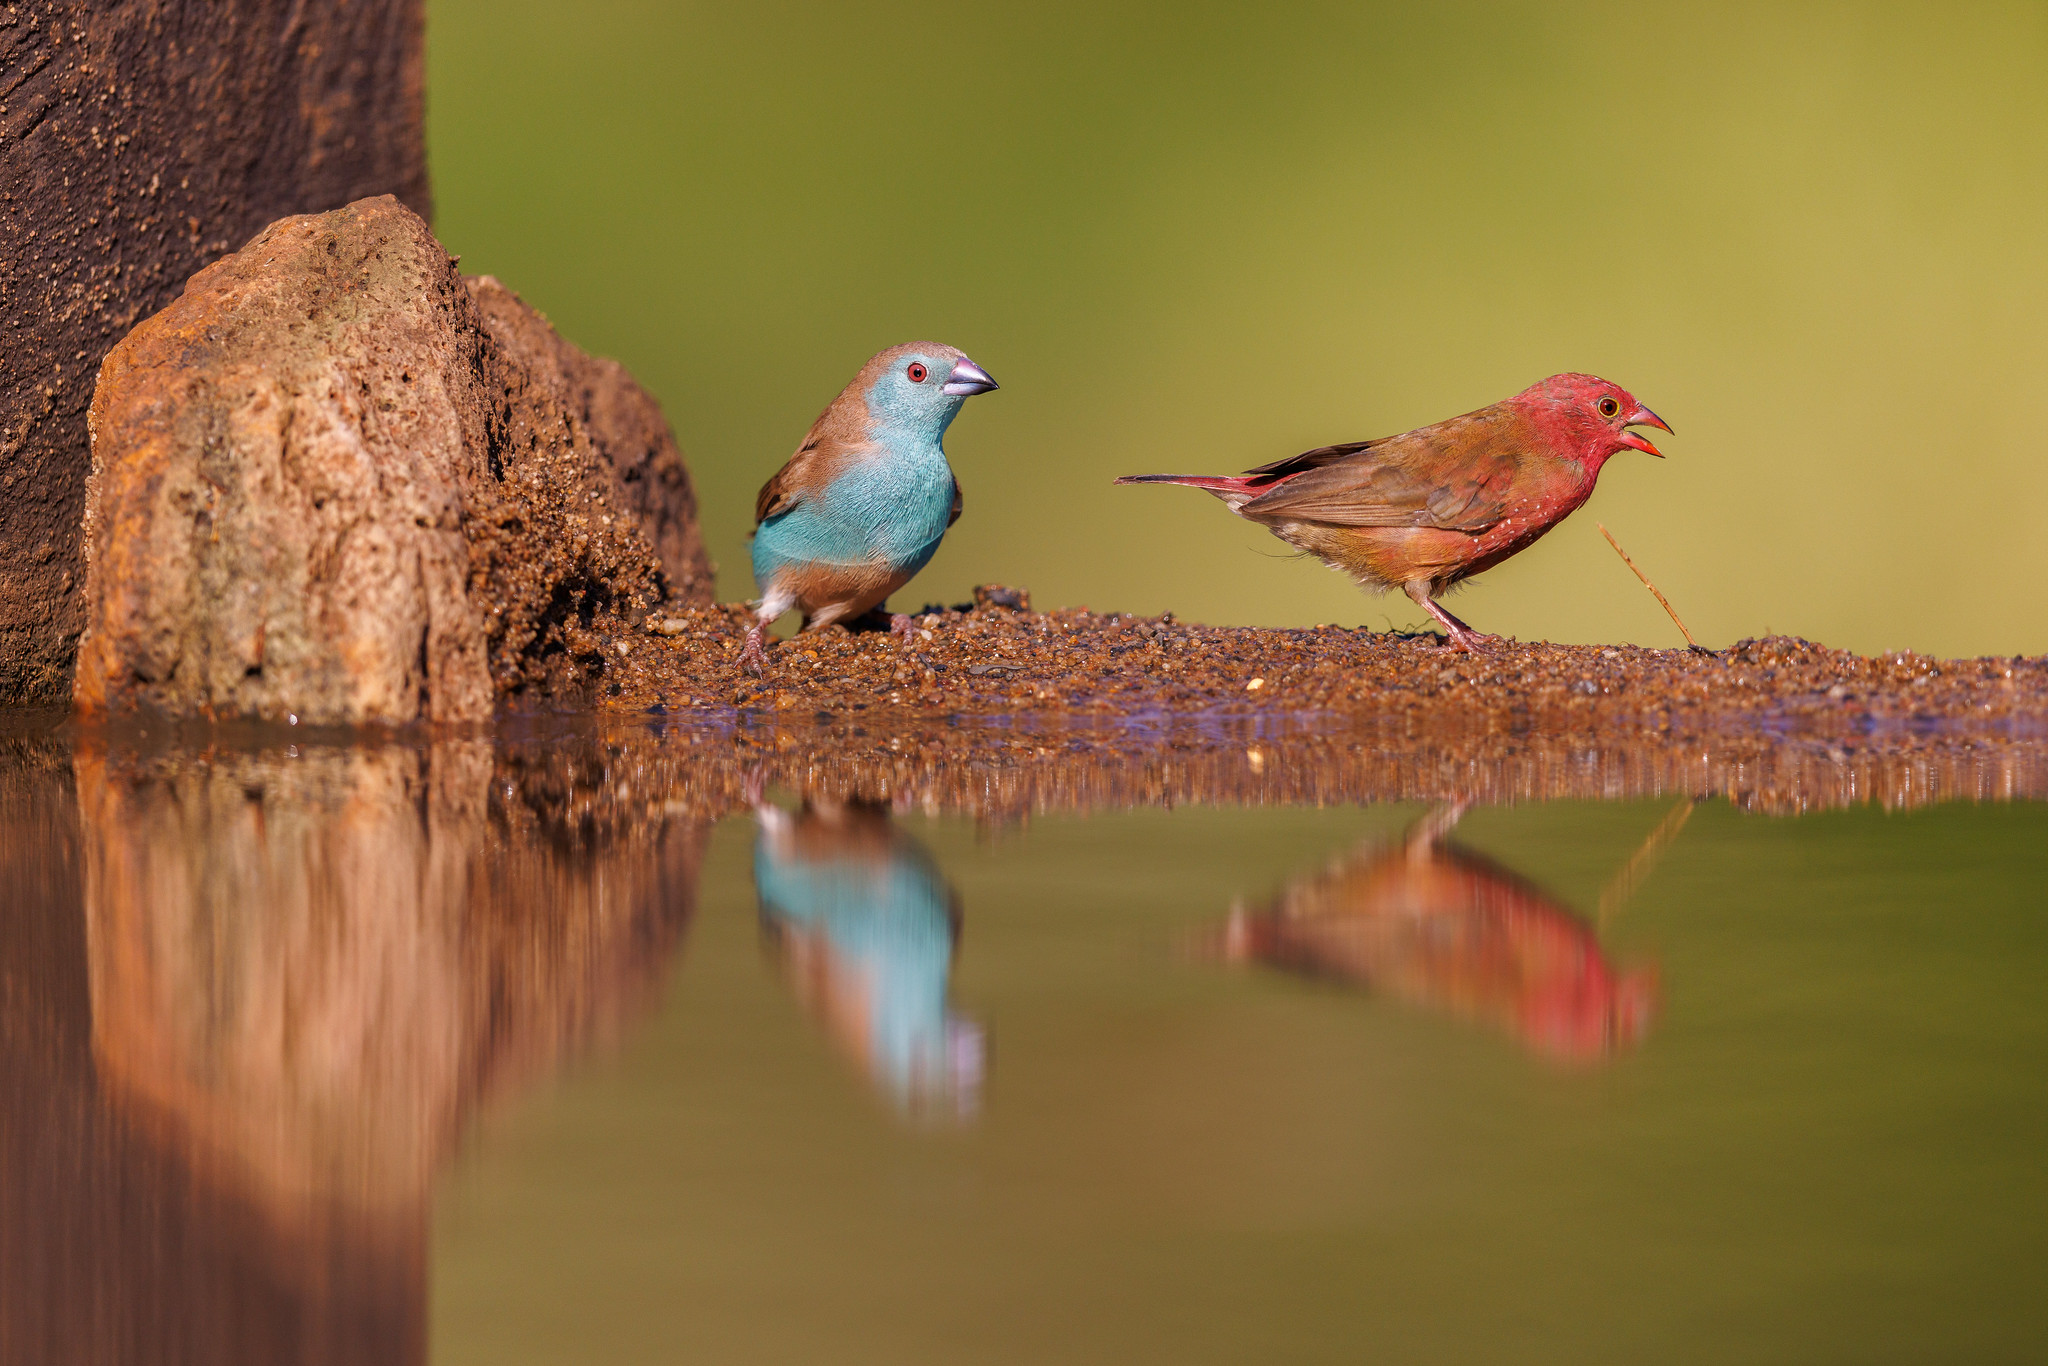 Blue Waxbill and Red-billed Firefinch - Zimanga, South Africa